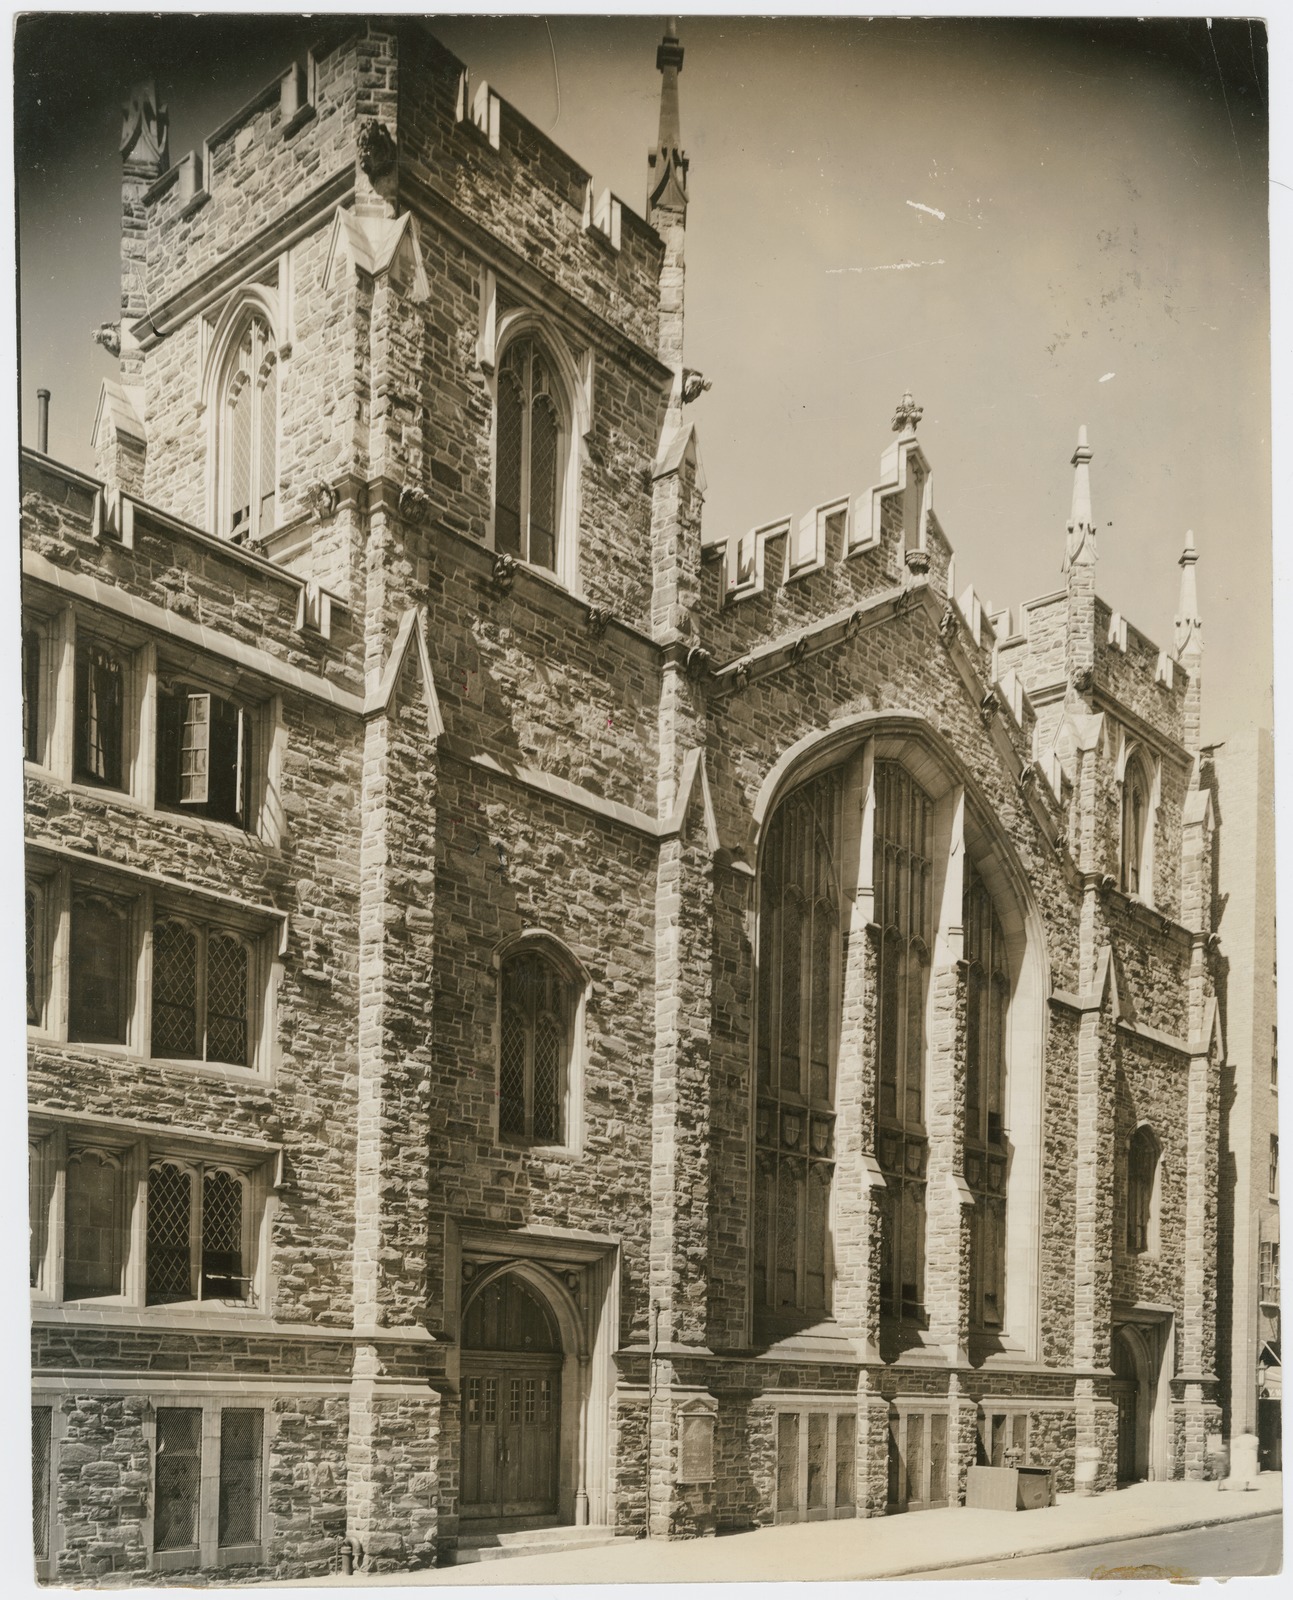 Abyssinian Baptist Church, in Harlem, New York City, May 1936